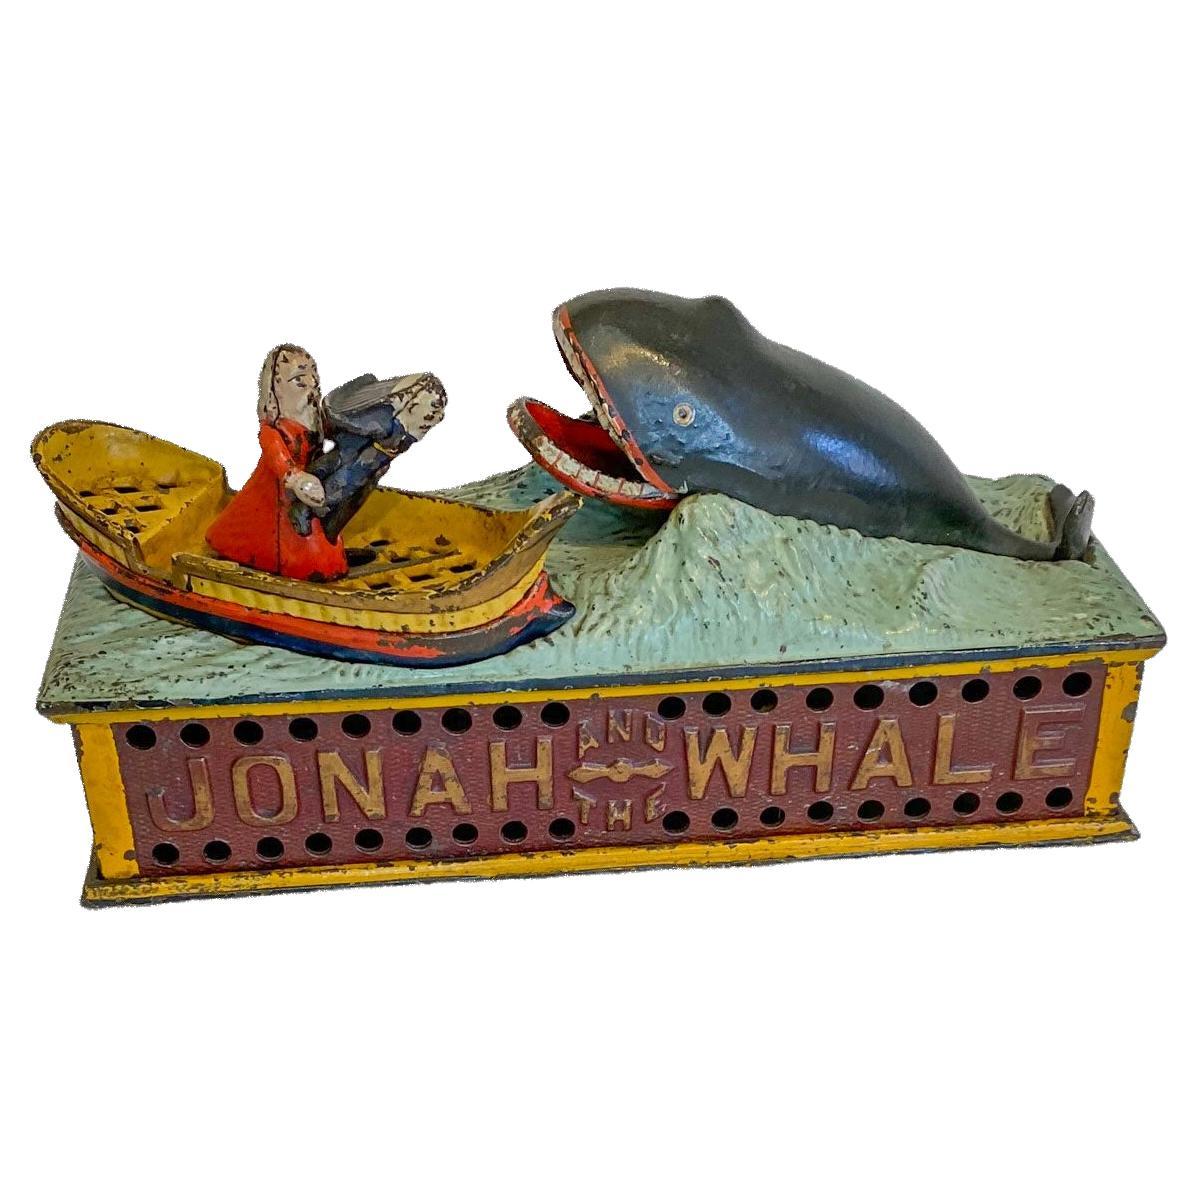 Jonah & the Whale Mechanical Bank by Shepard Hardware